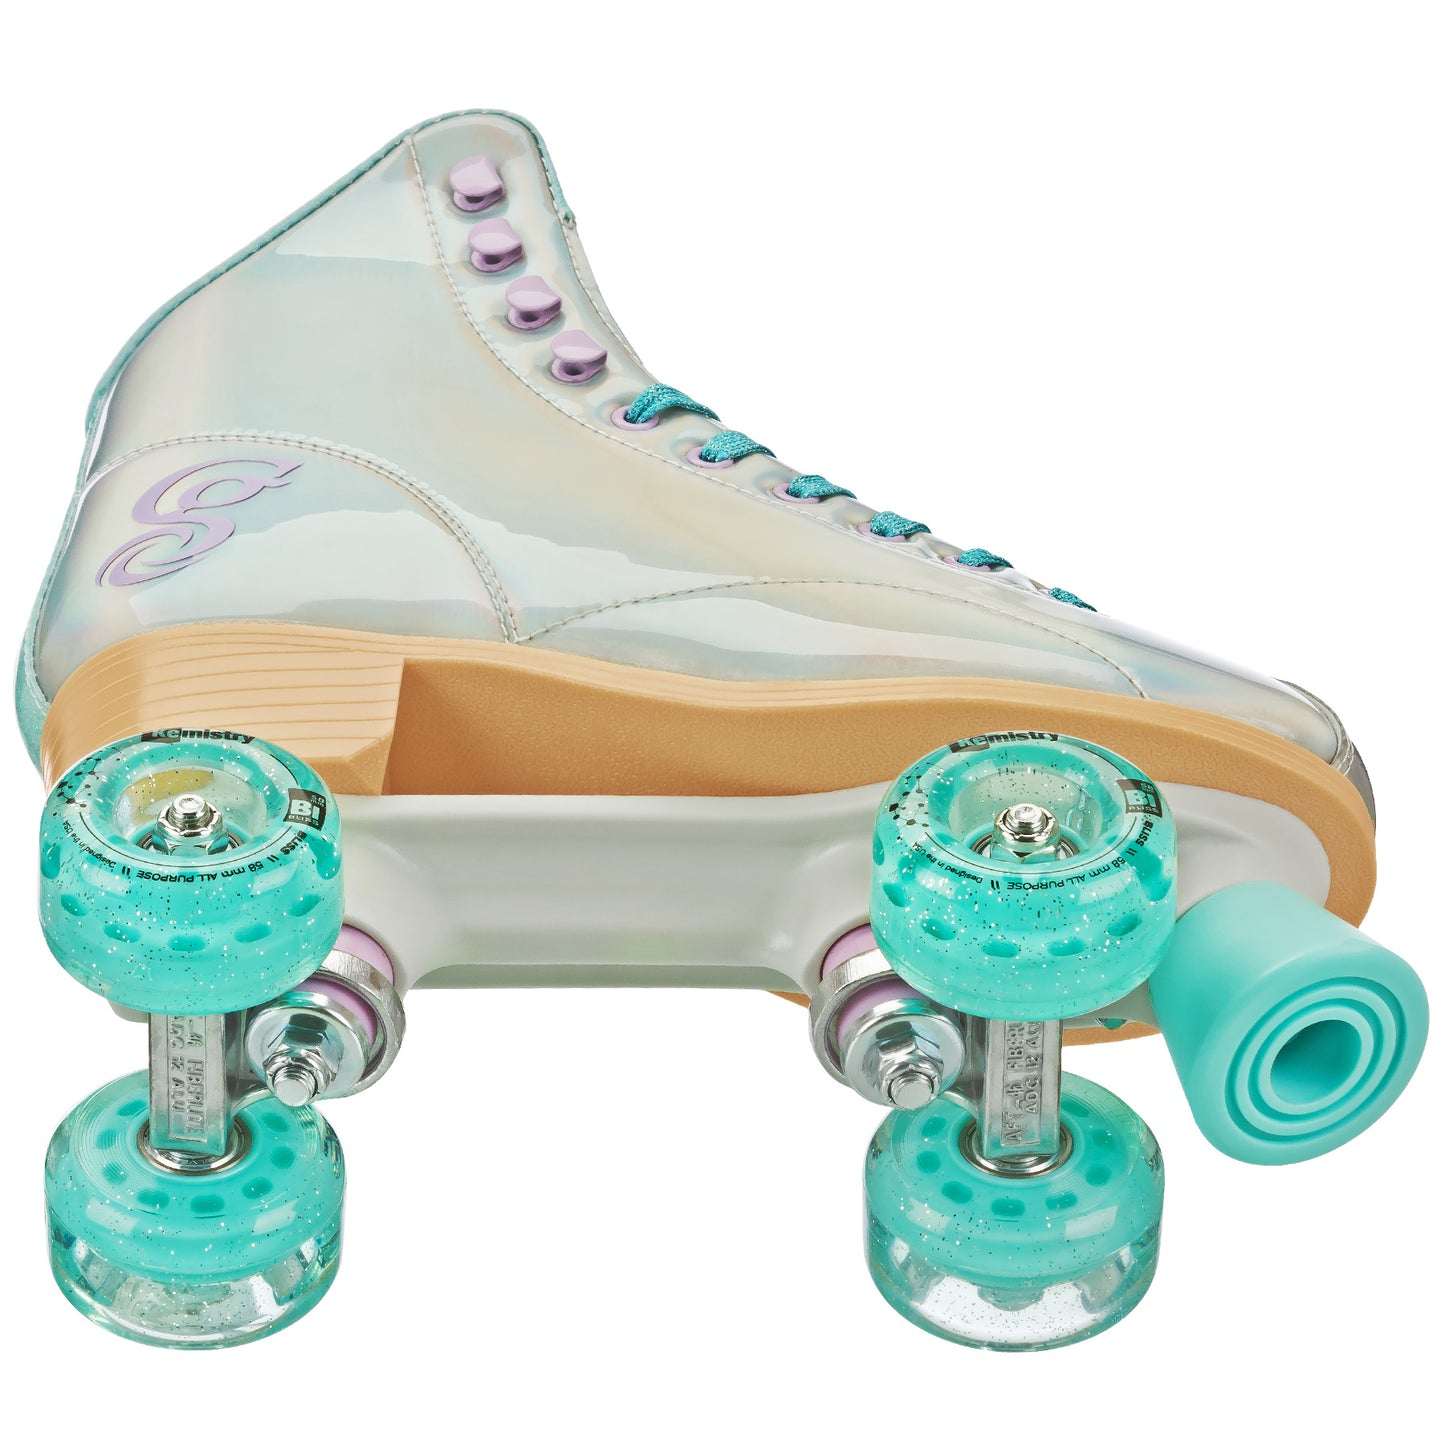 Candi Grl Sabina Quad Roller Skates